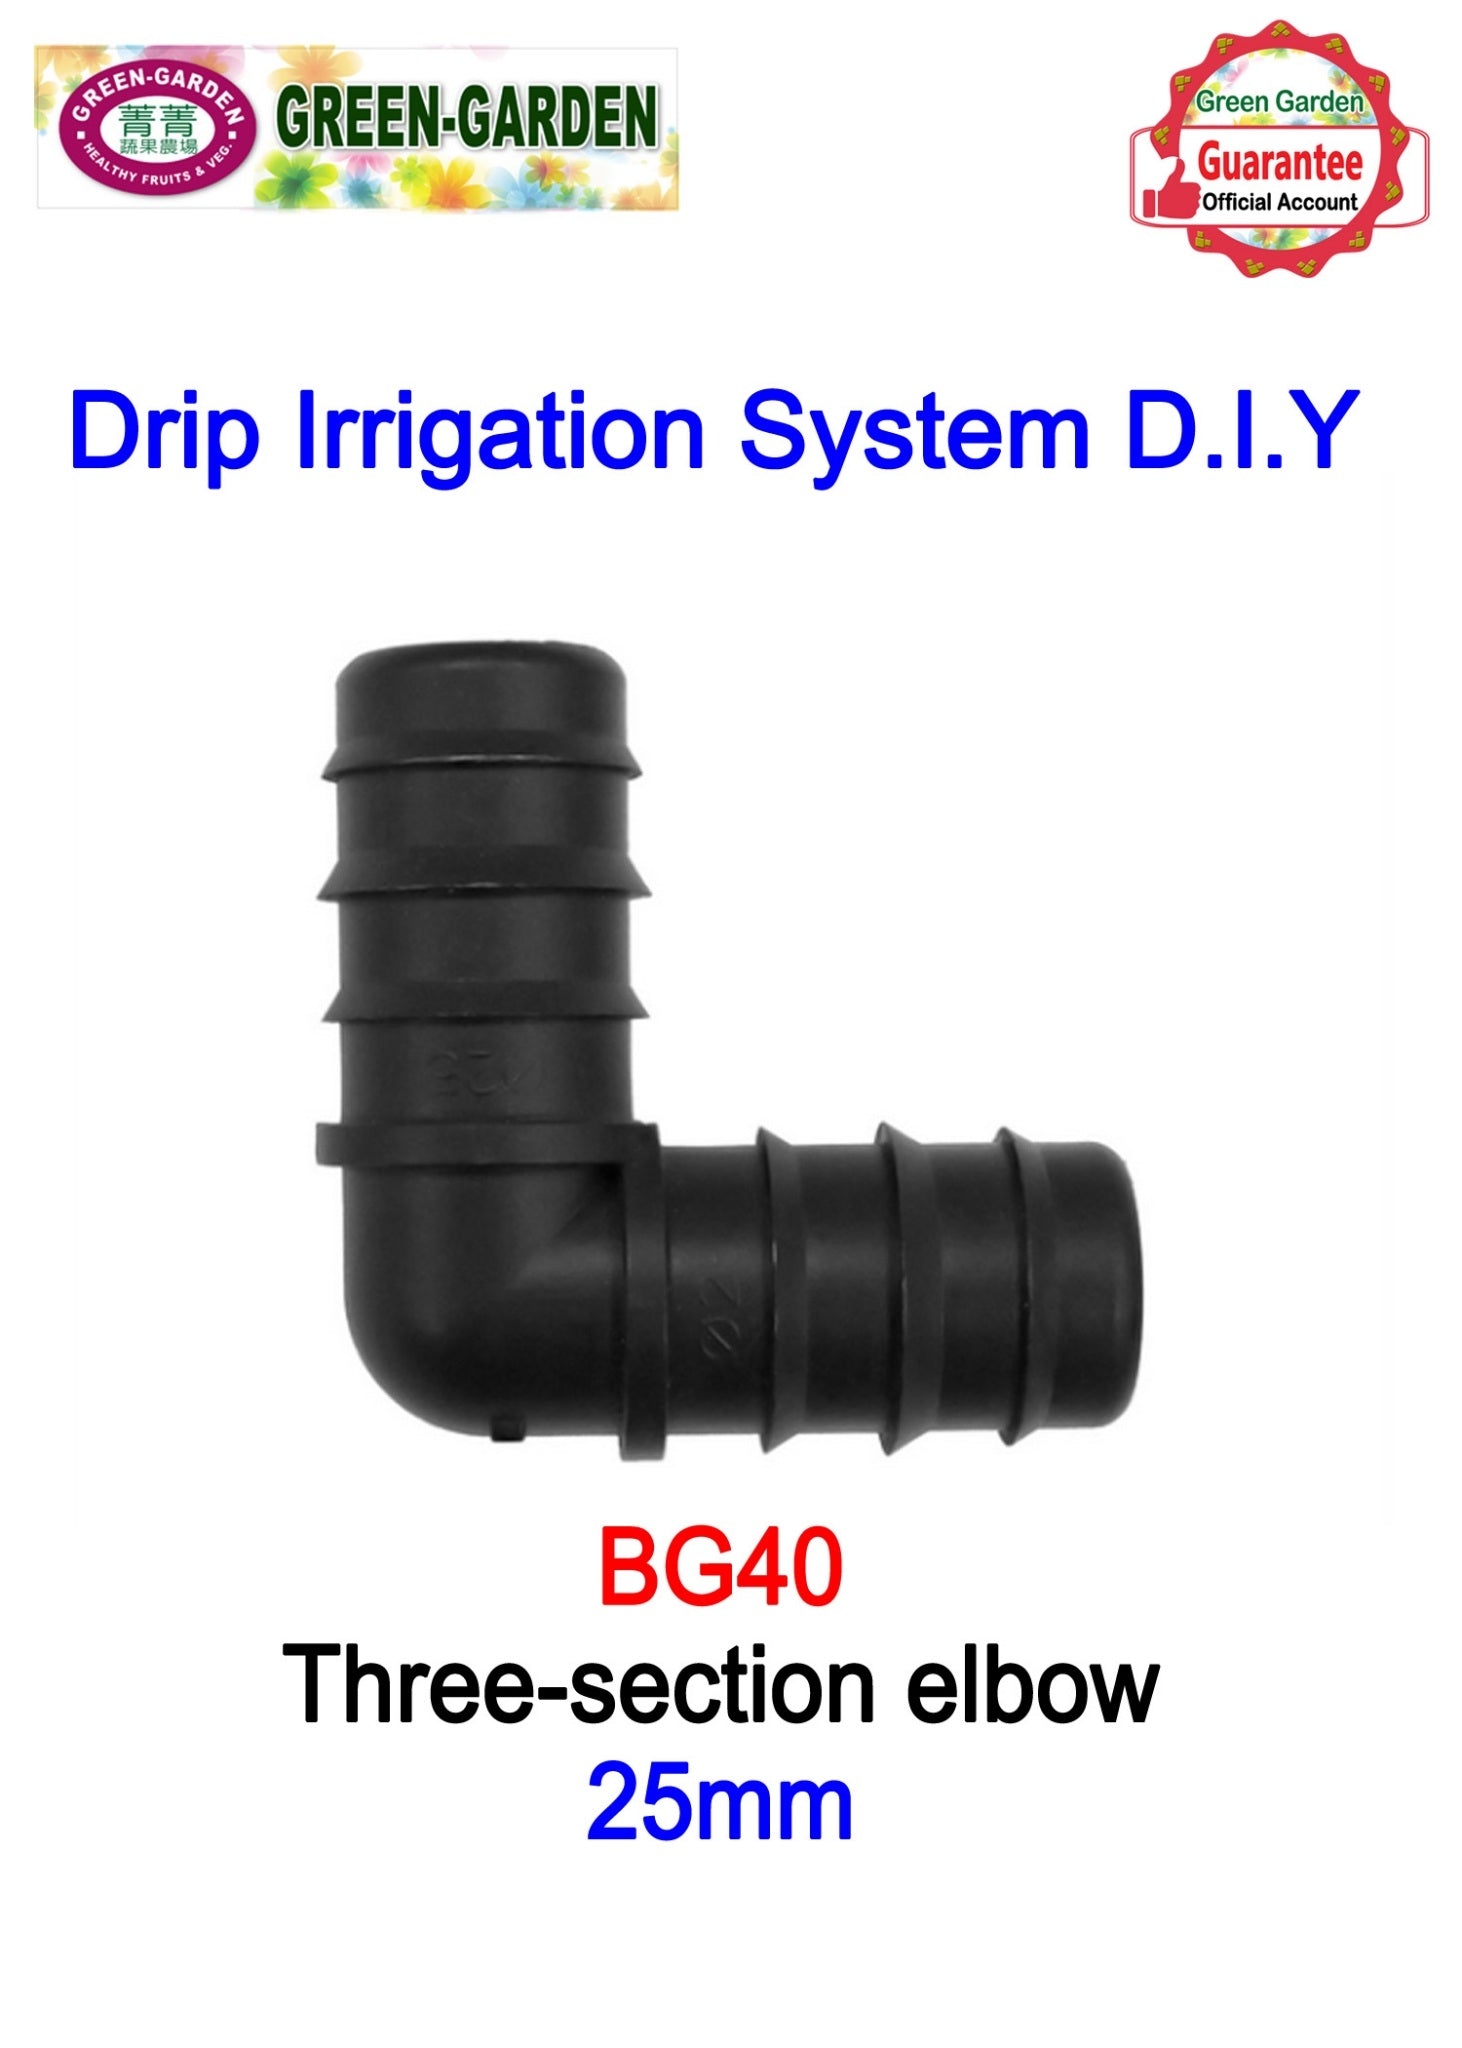 Drip Irrigation System - 25mm three-section elbow BG40